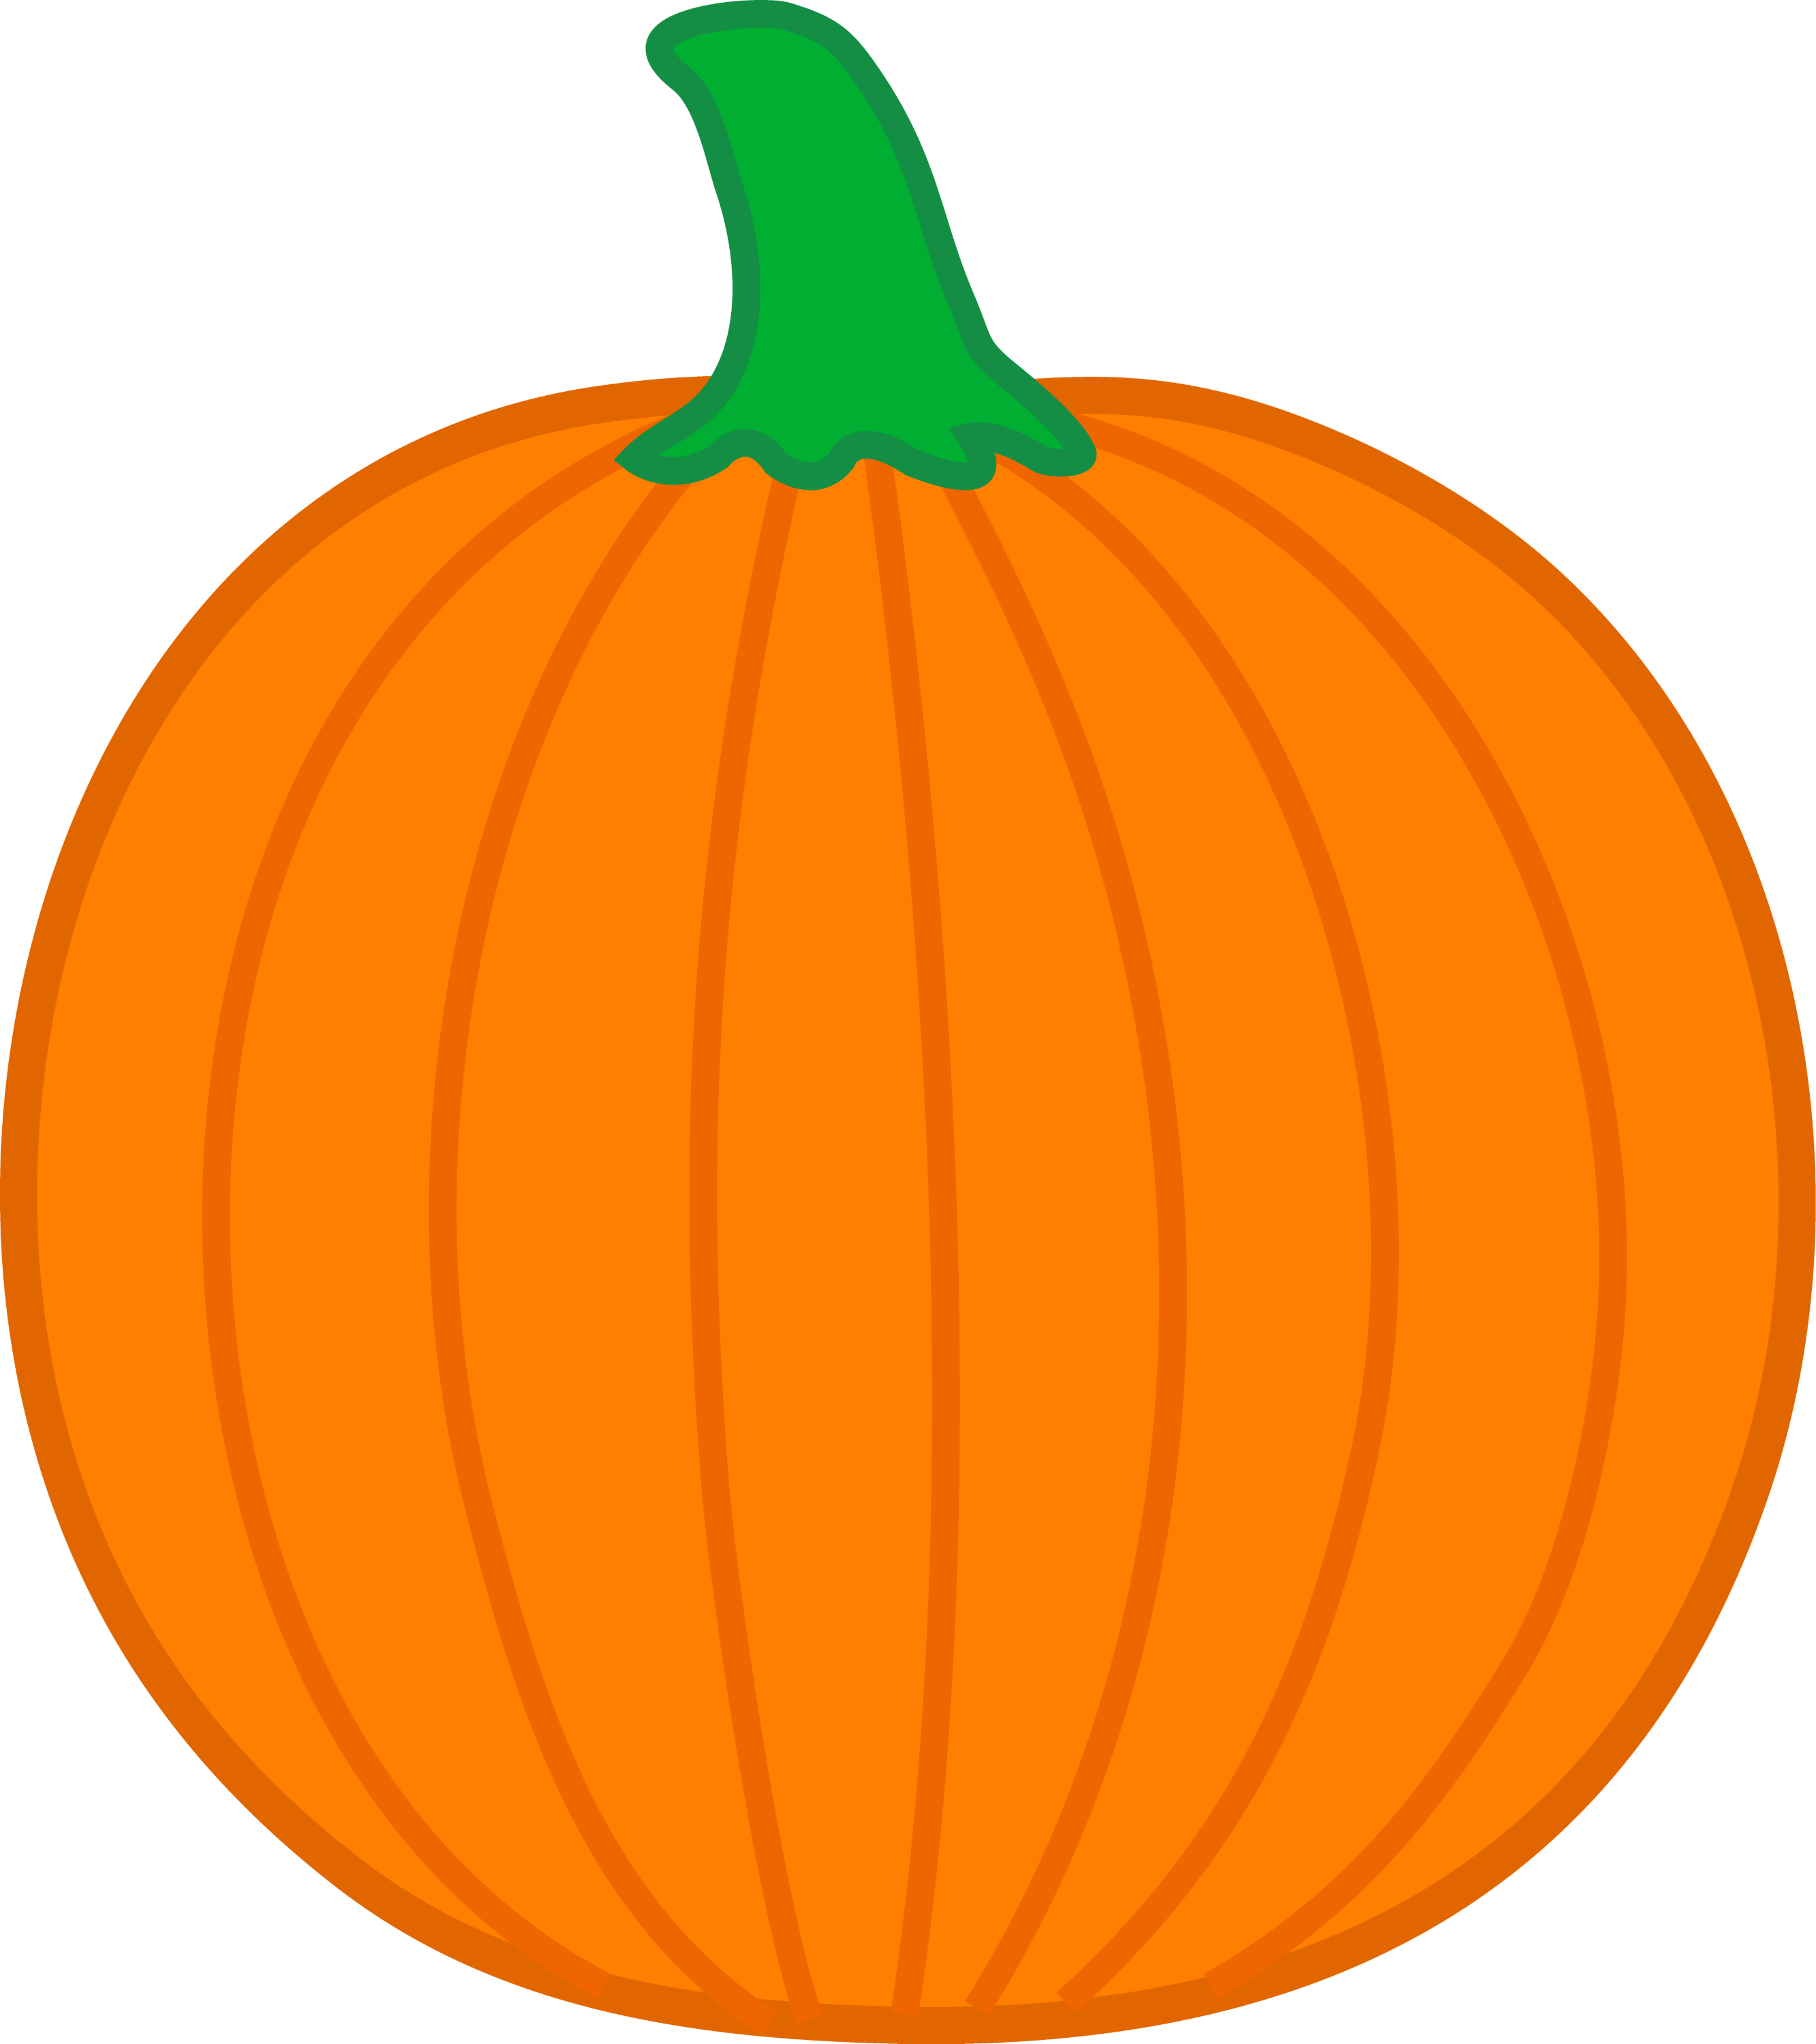 Simple Orange Halloween Pumpkin Free Clip Art